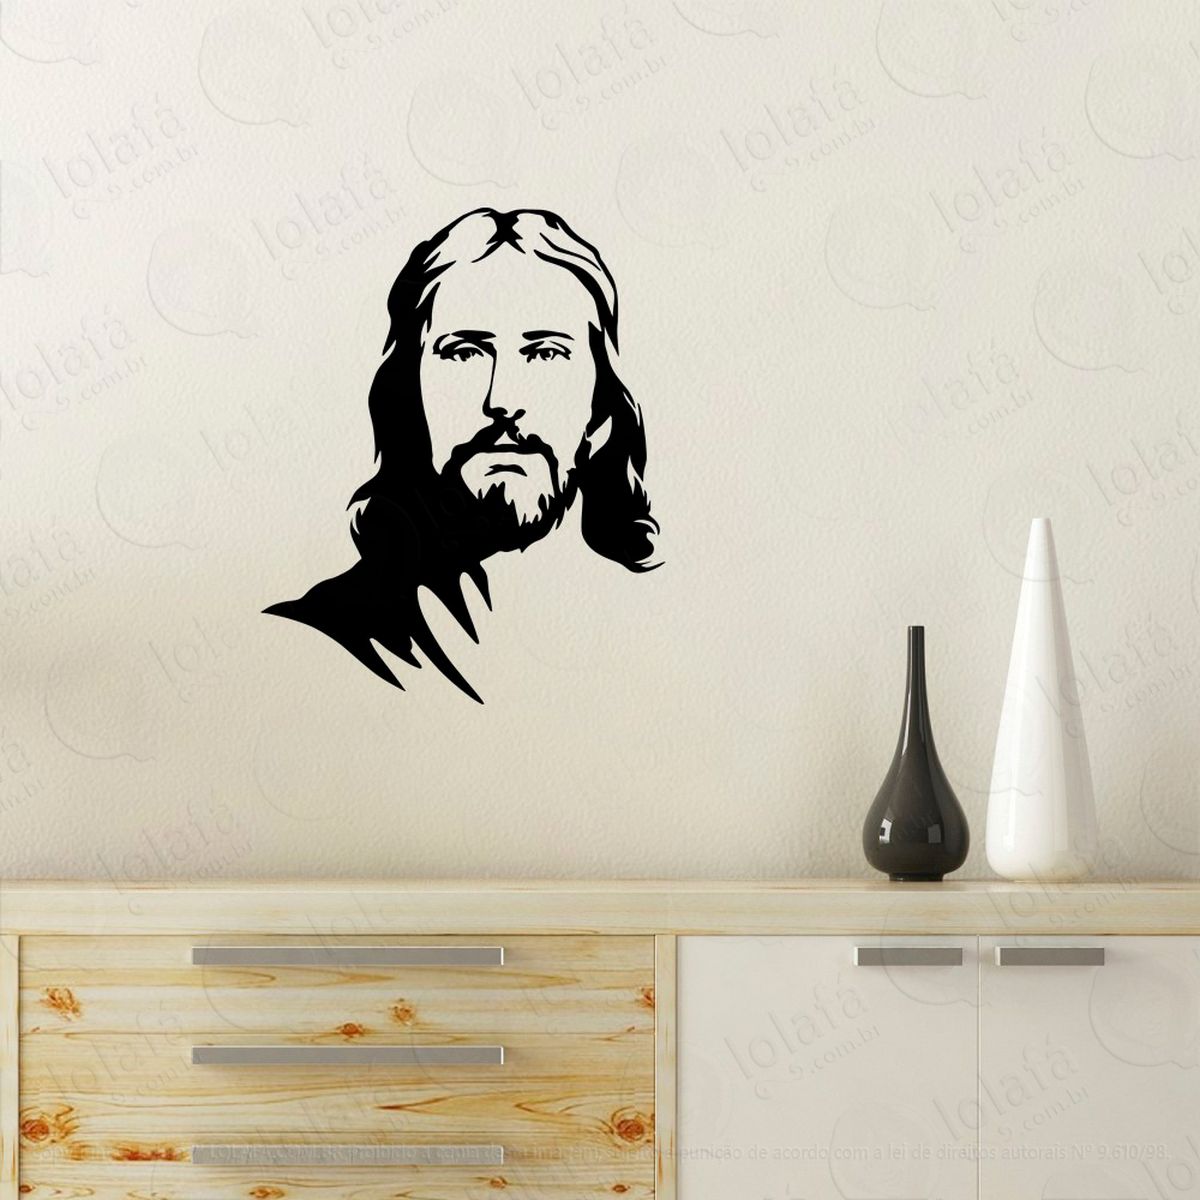 jesus cristo adesivo de parede decorativo para casa, quarto, sala e vidro - mod:11